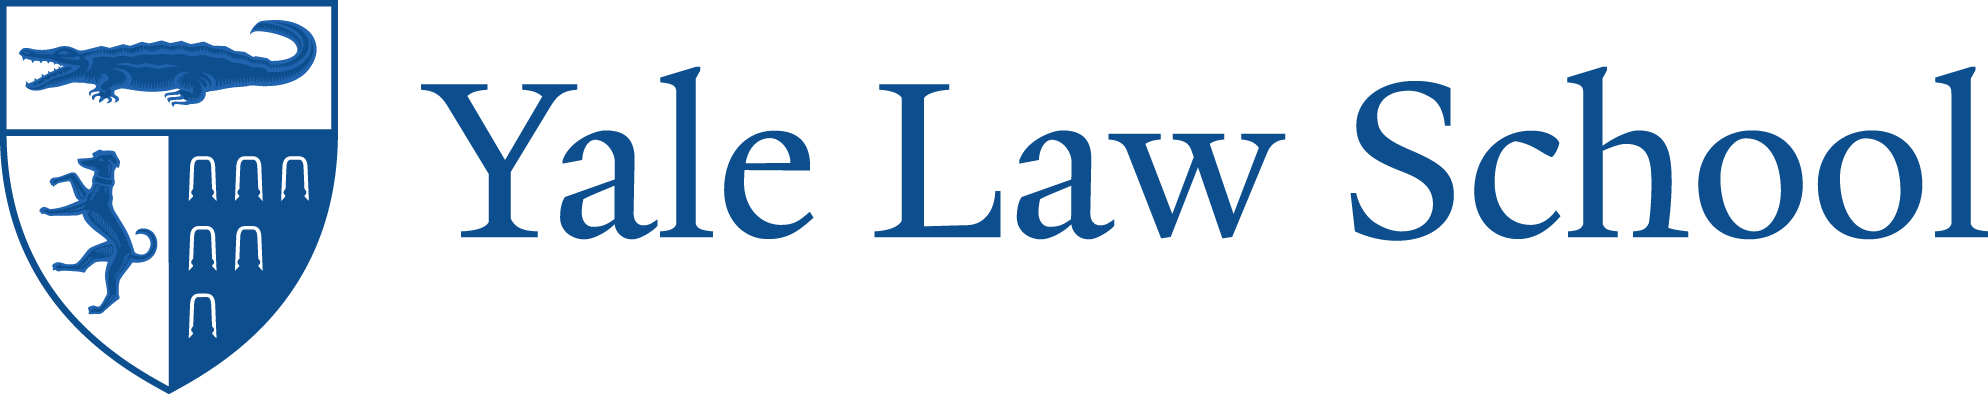 Yale Law School logo